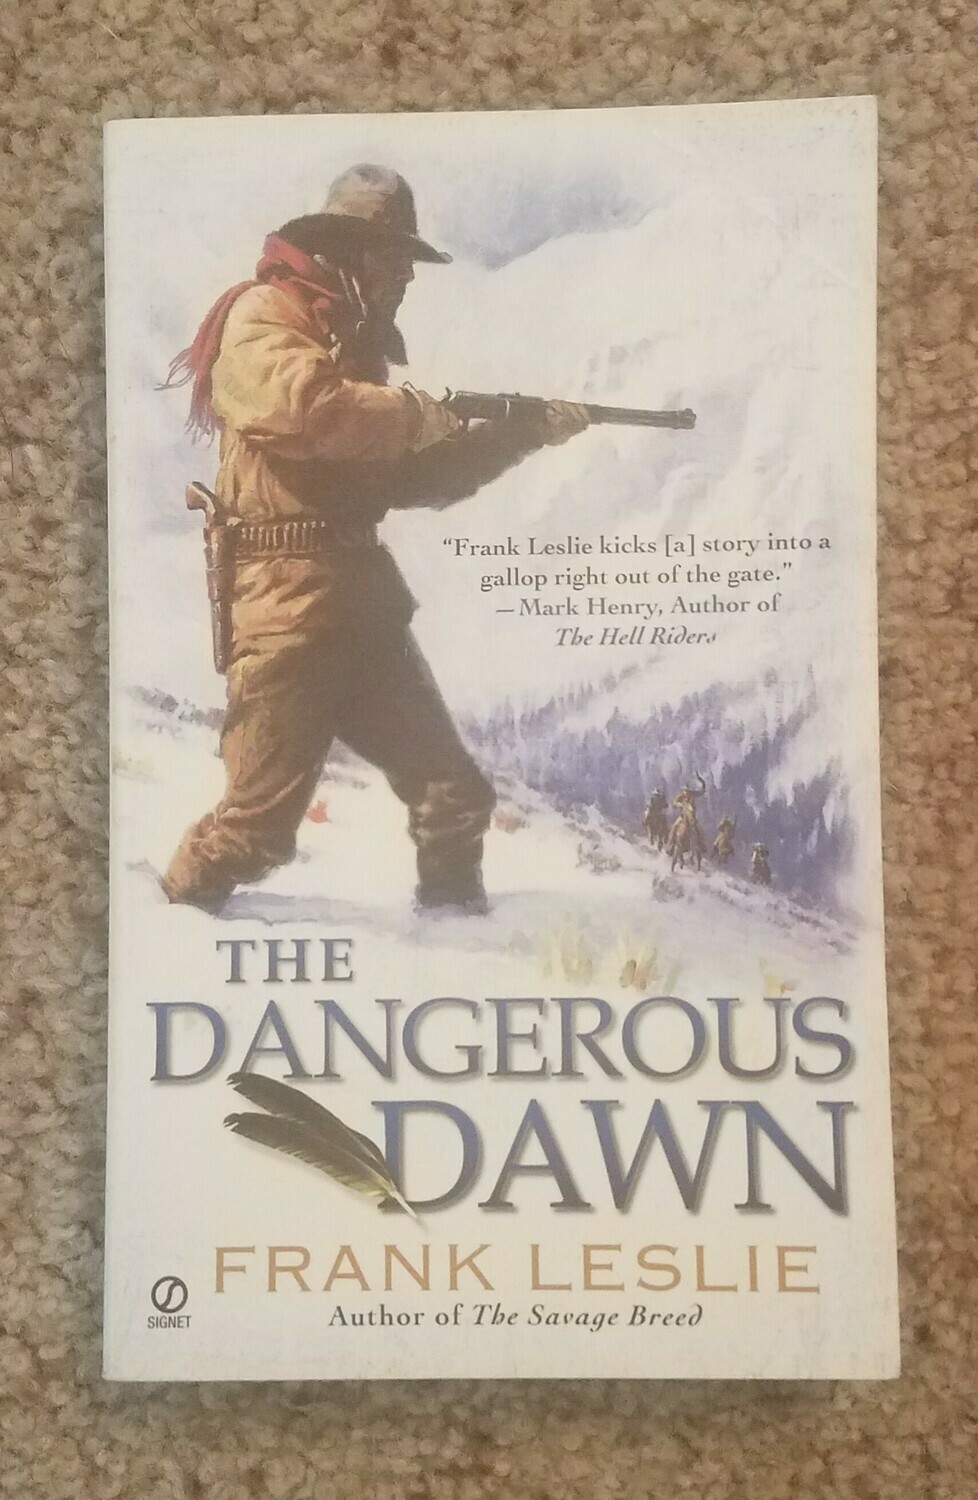 The Dangerous Dawn by Frank Leslie